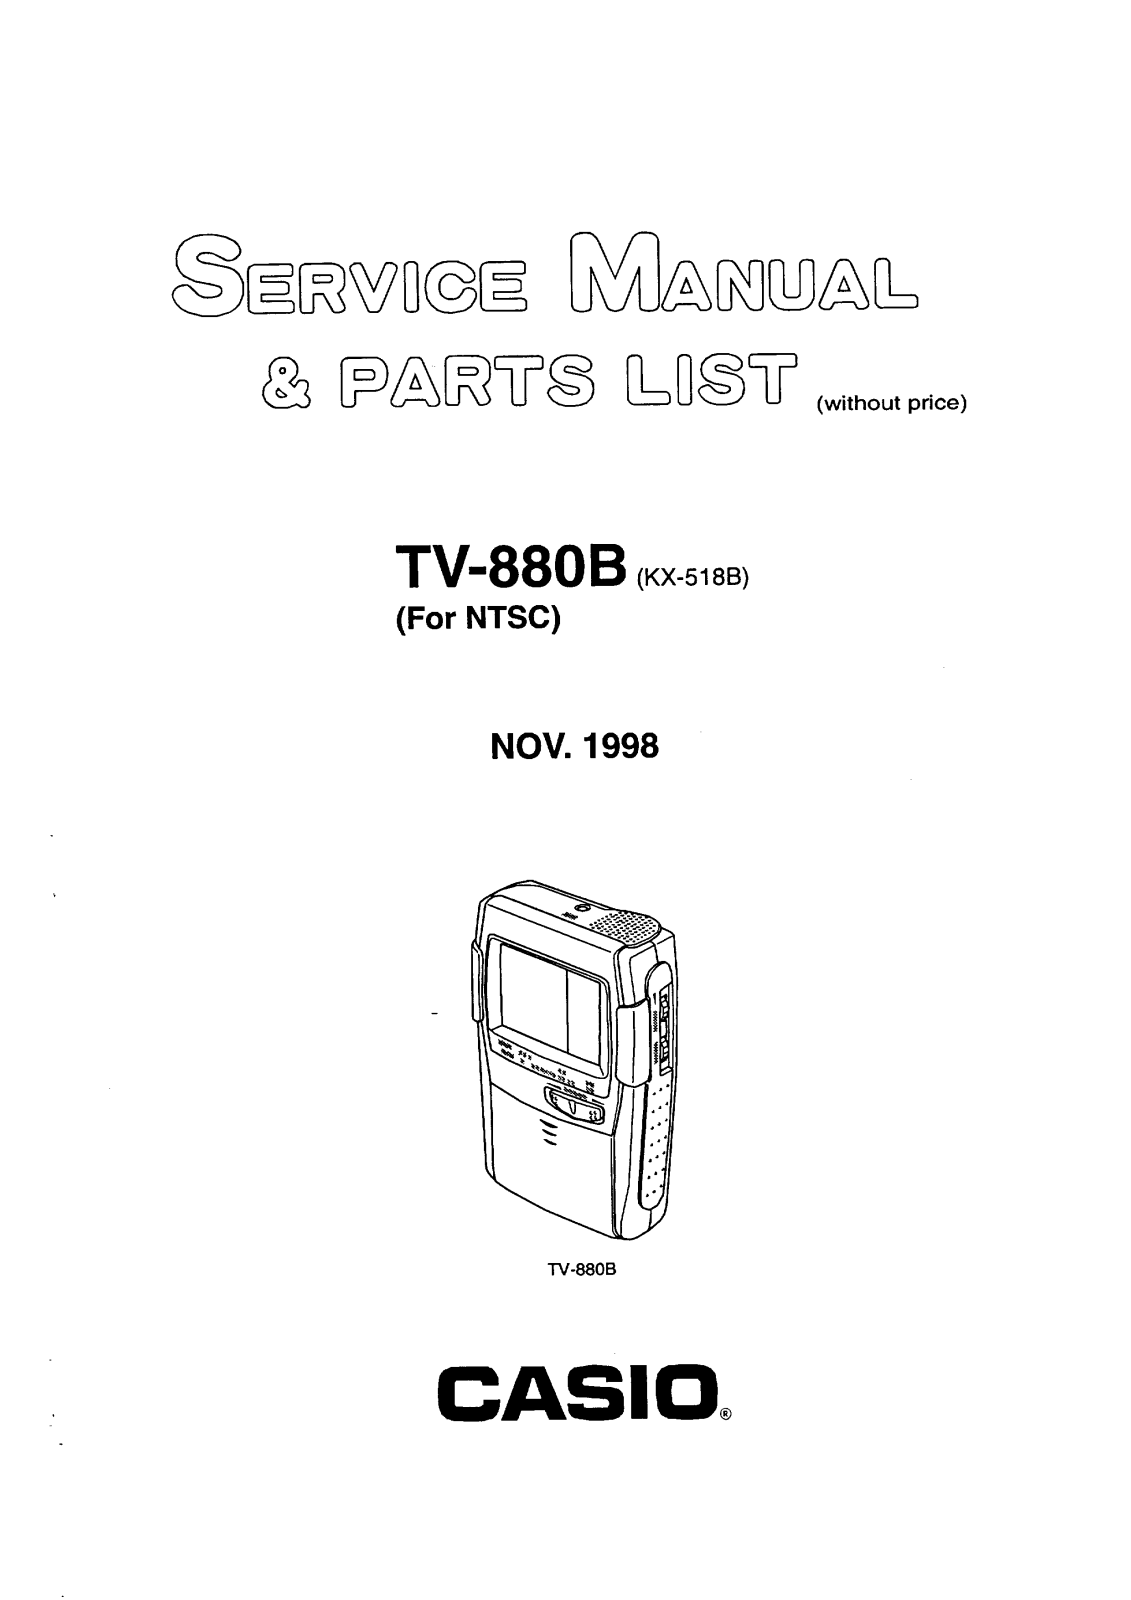 Casio TV-880 Schematic